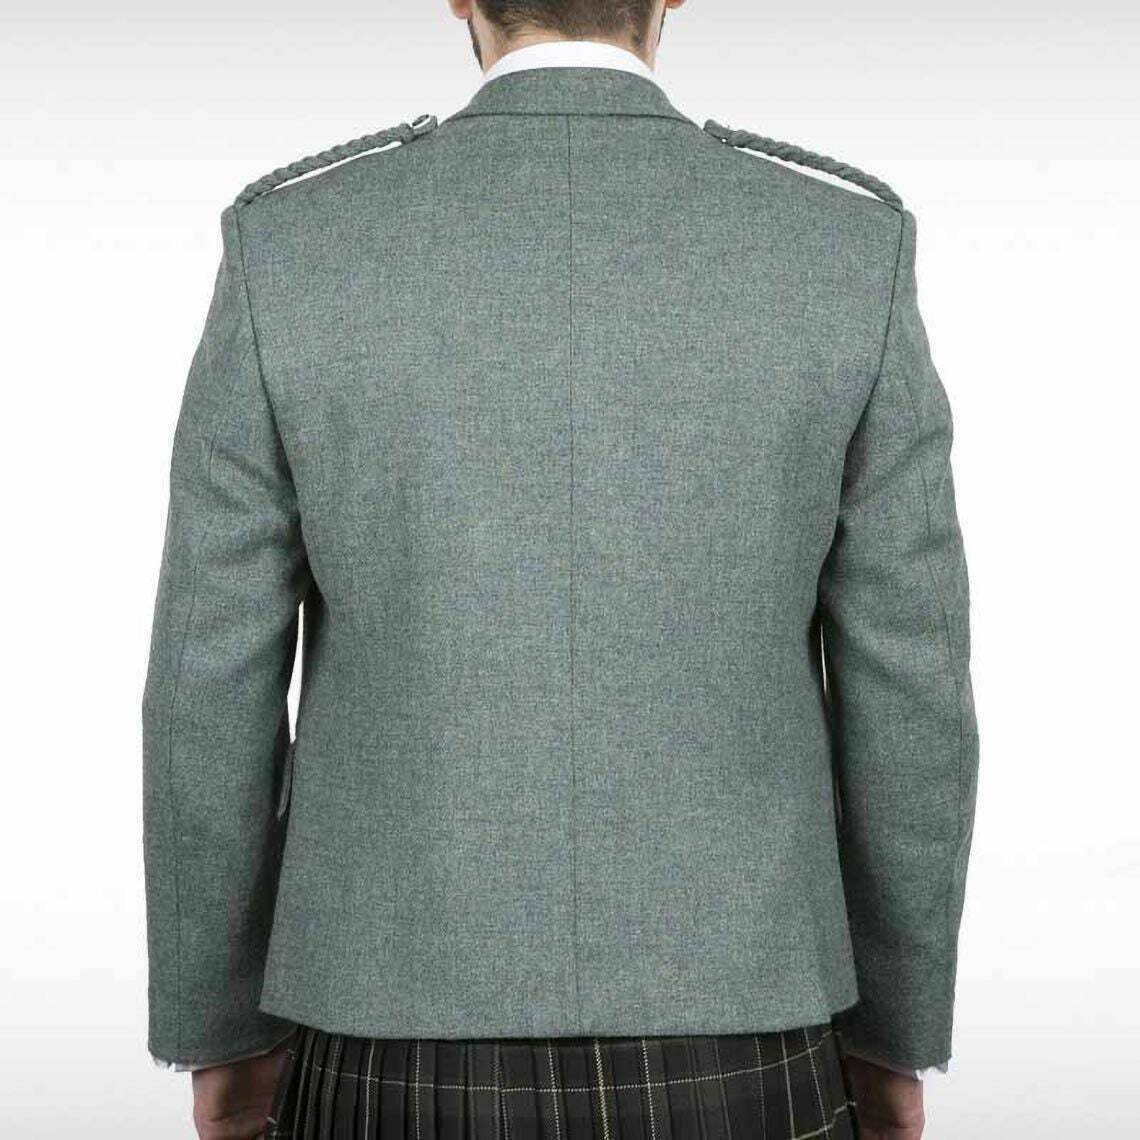 Scottish Men's Lovat Green Argyle kilt Jacket With Waistcoat Wedding Kilt Jacket